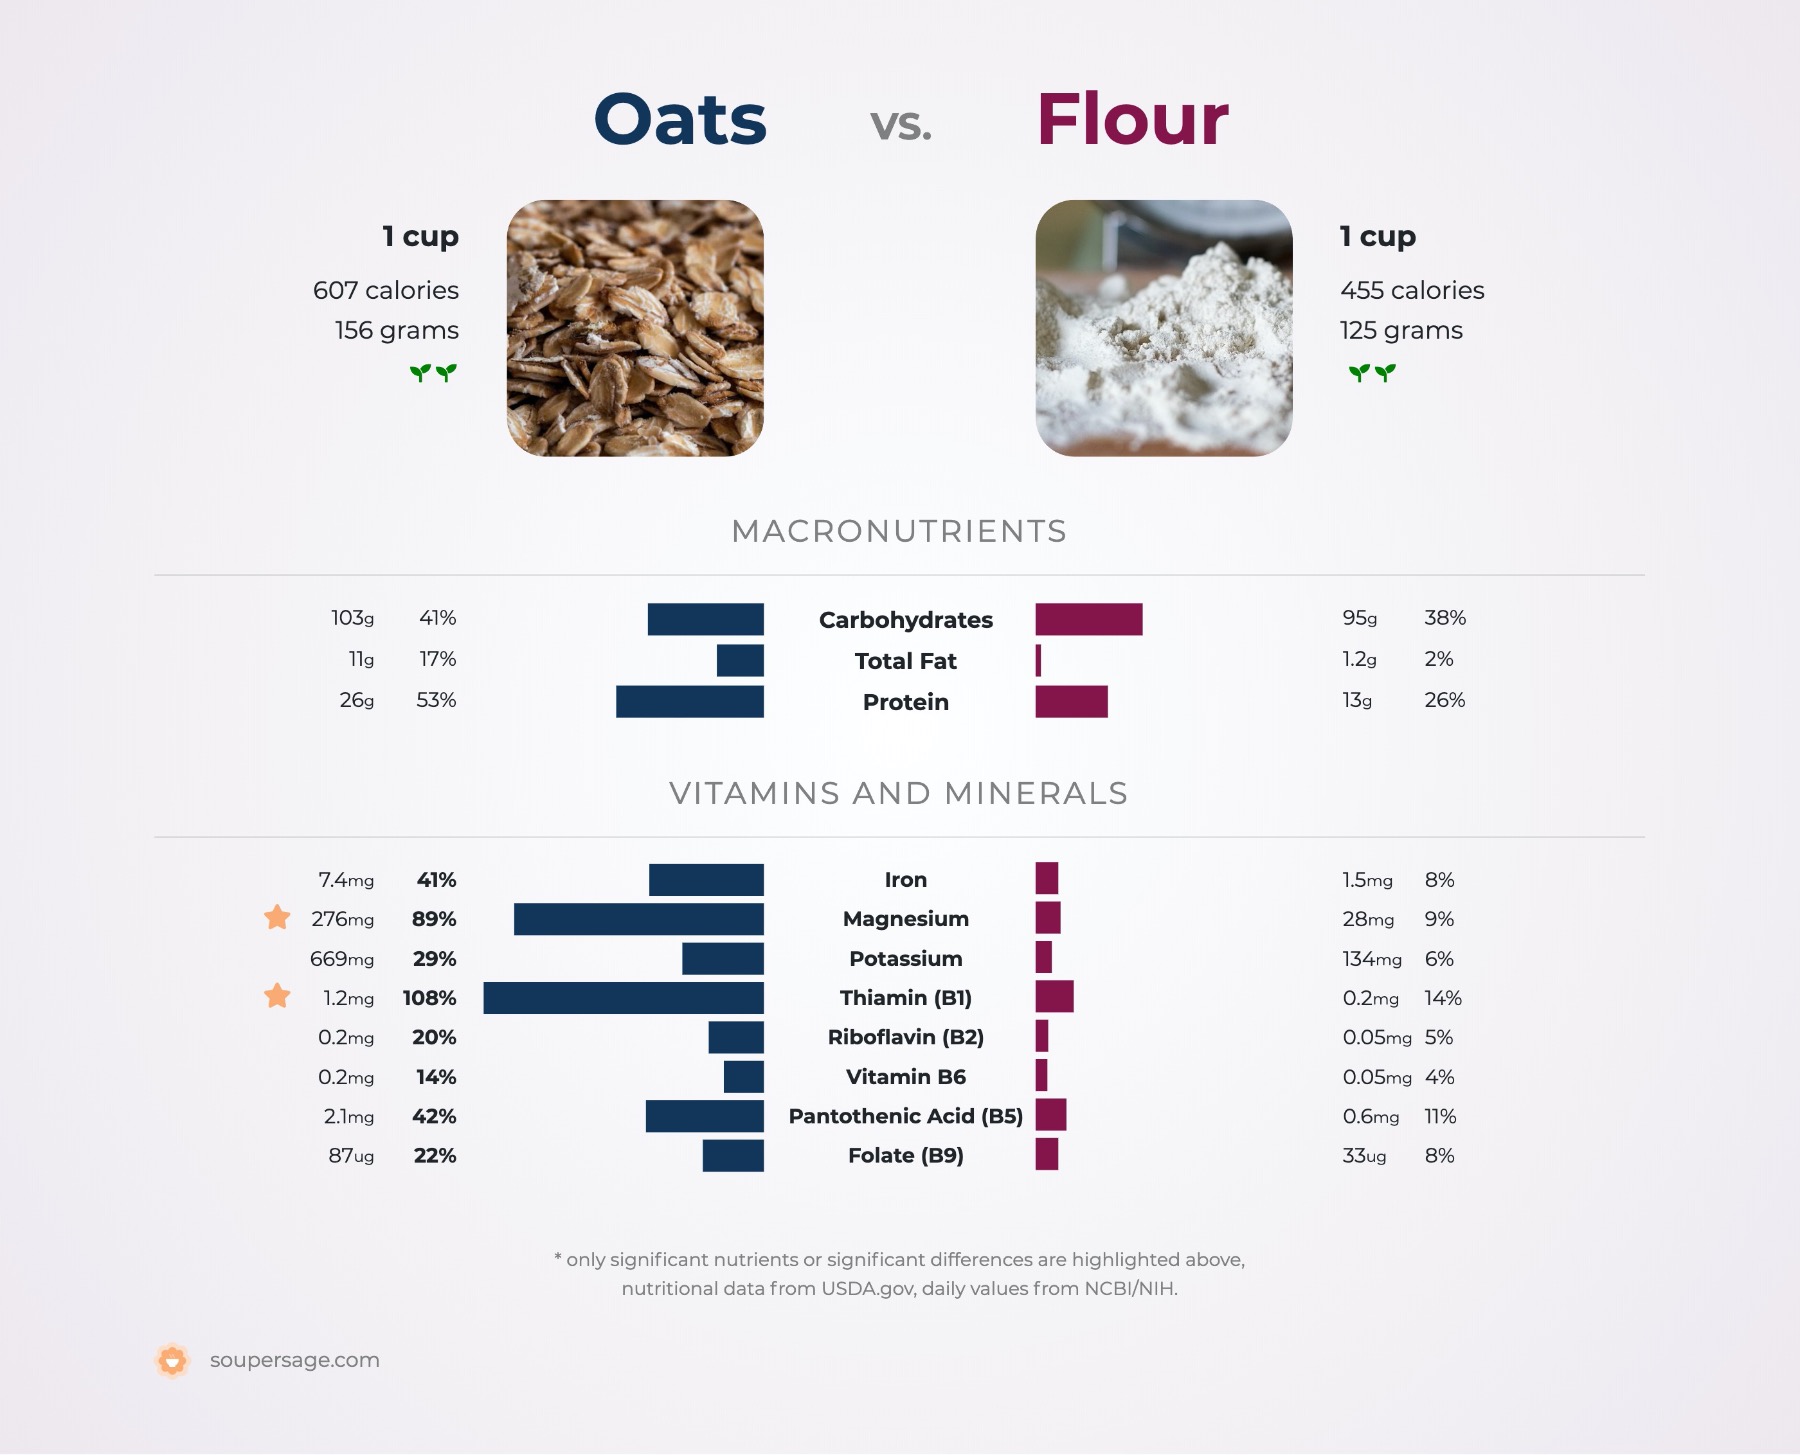 https://www.soupersage.com/css/img/pages/compare/oats-vs-flour.jpg